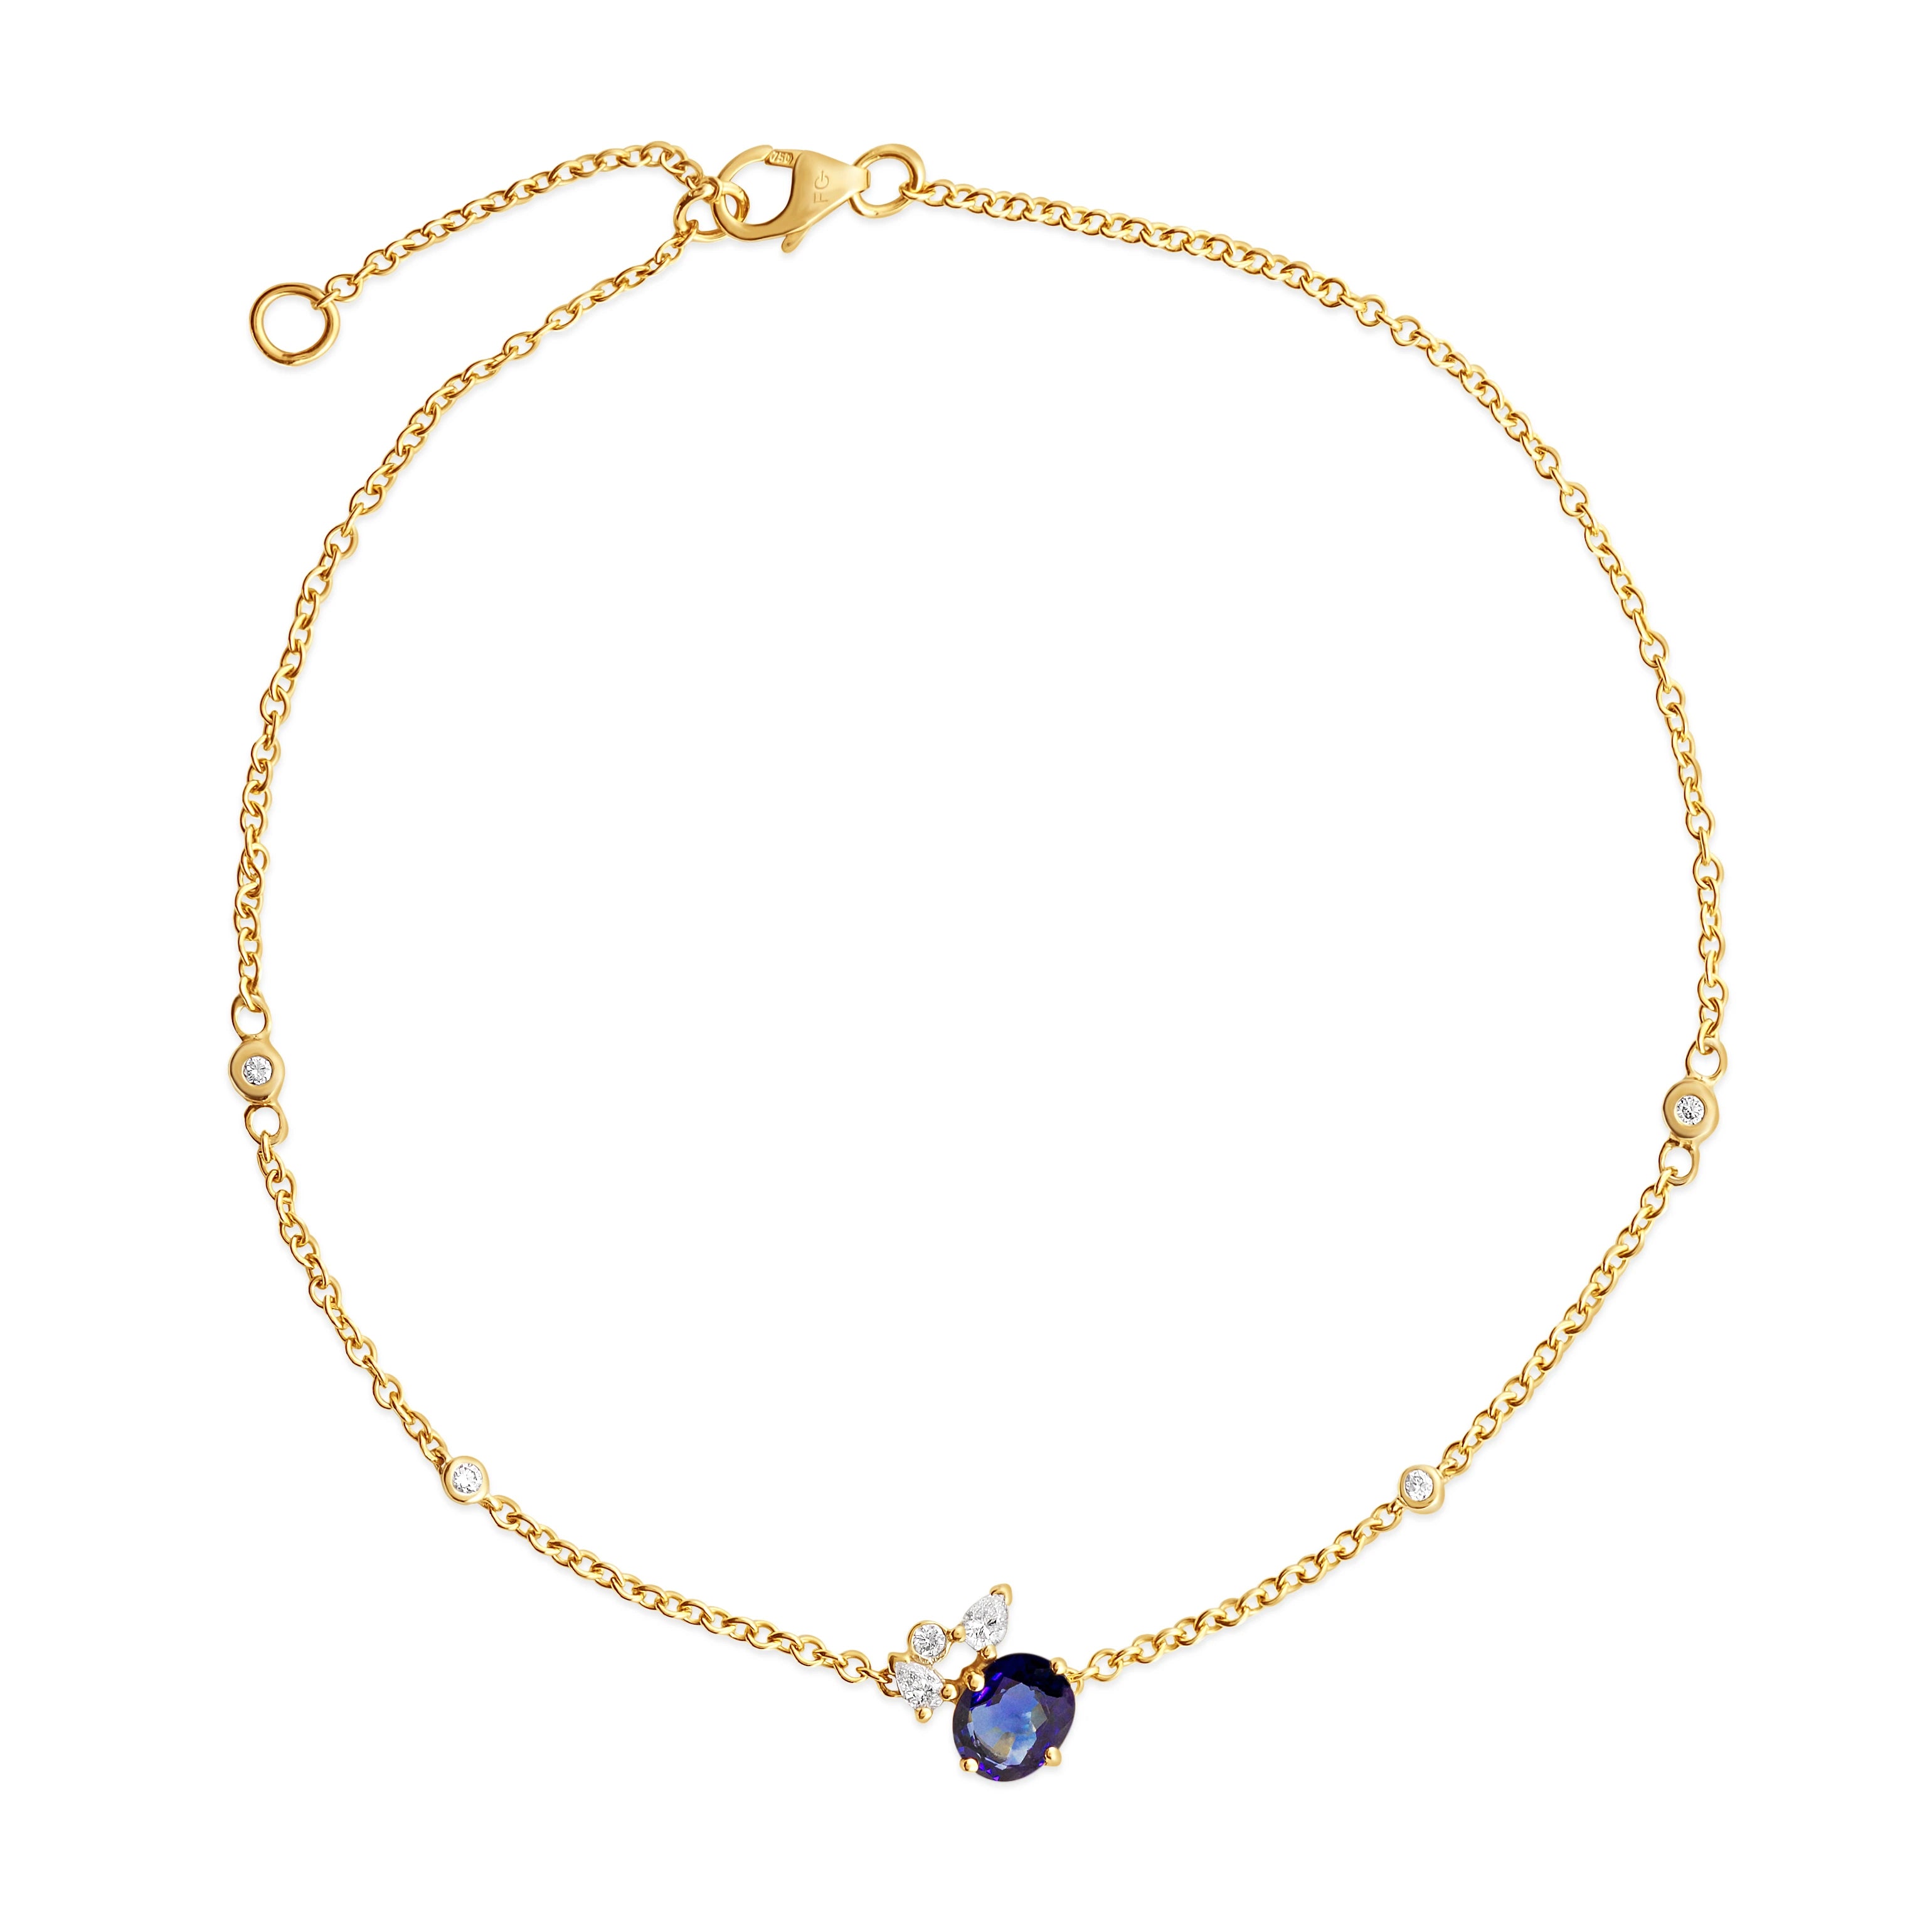 Bracelet en Or 18 Carat avec Saphir Bleu et Diamants - Moribana - Politains